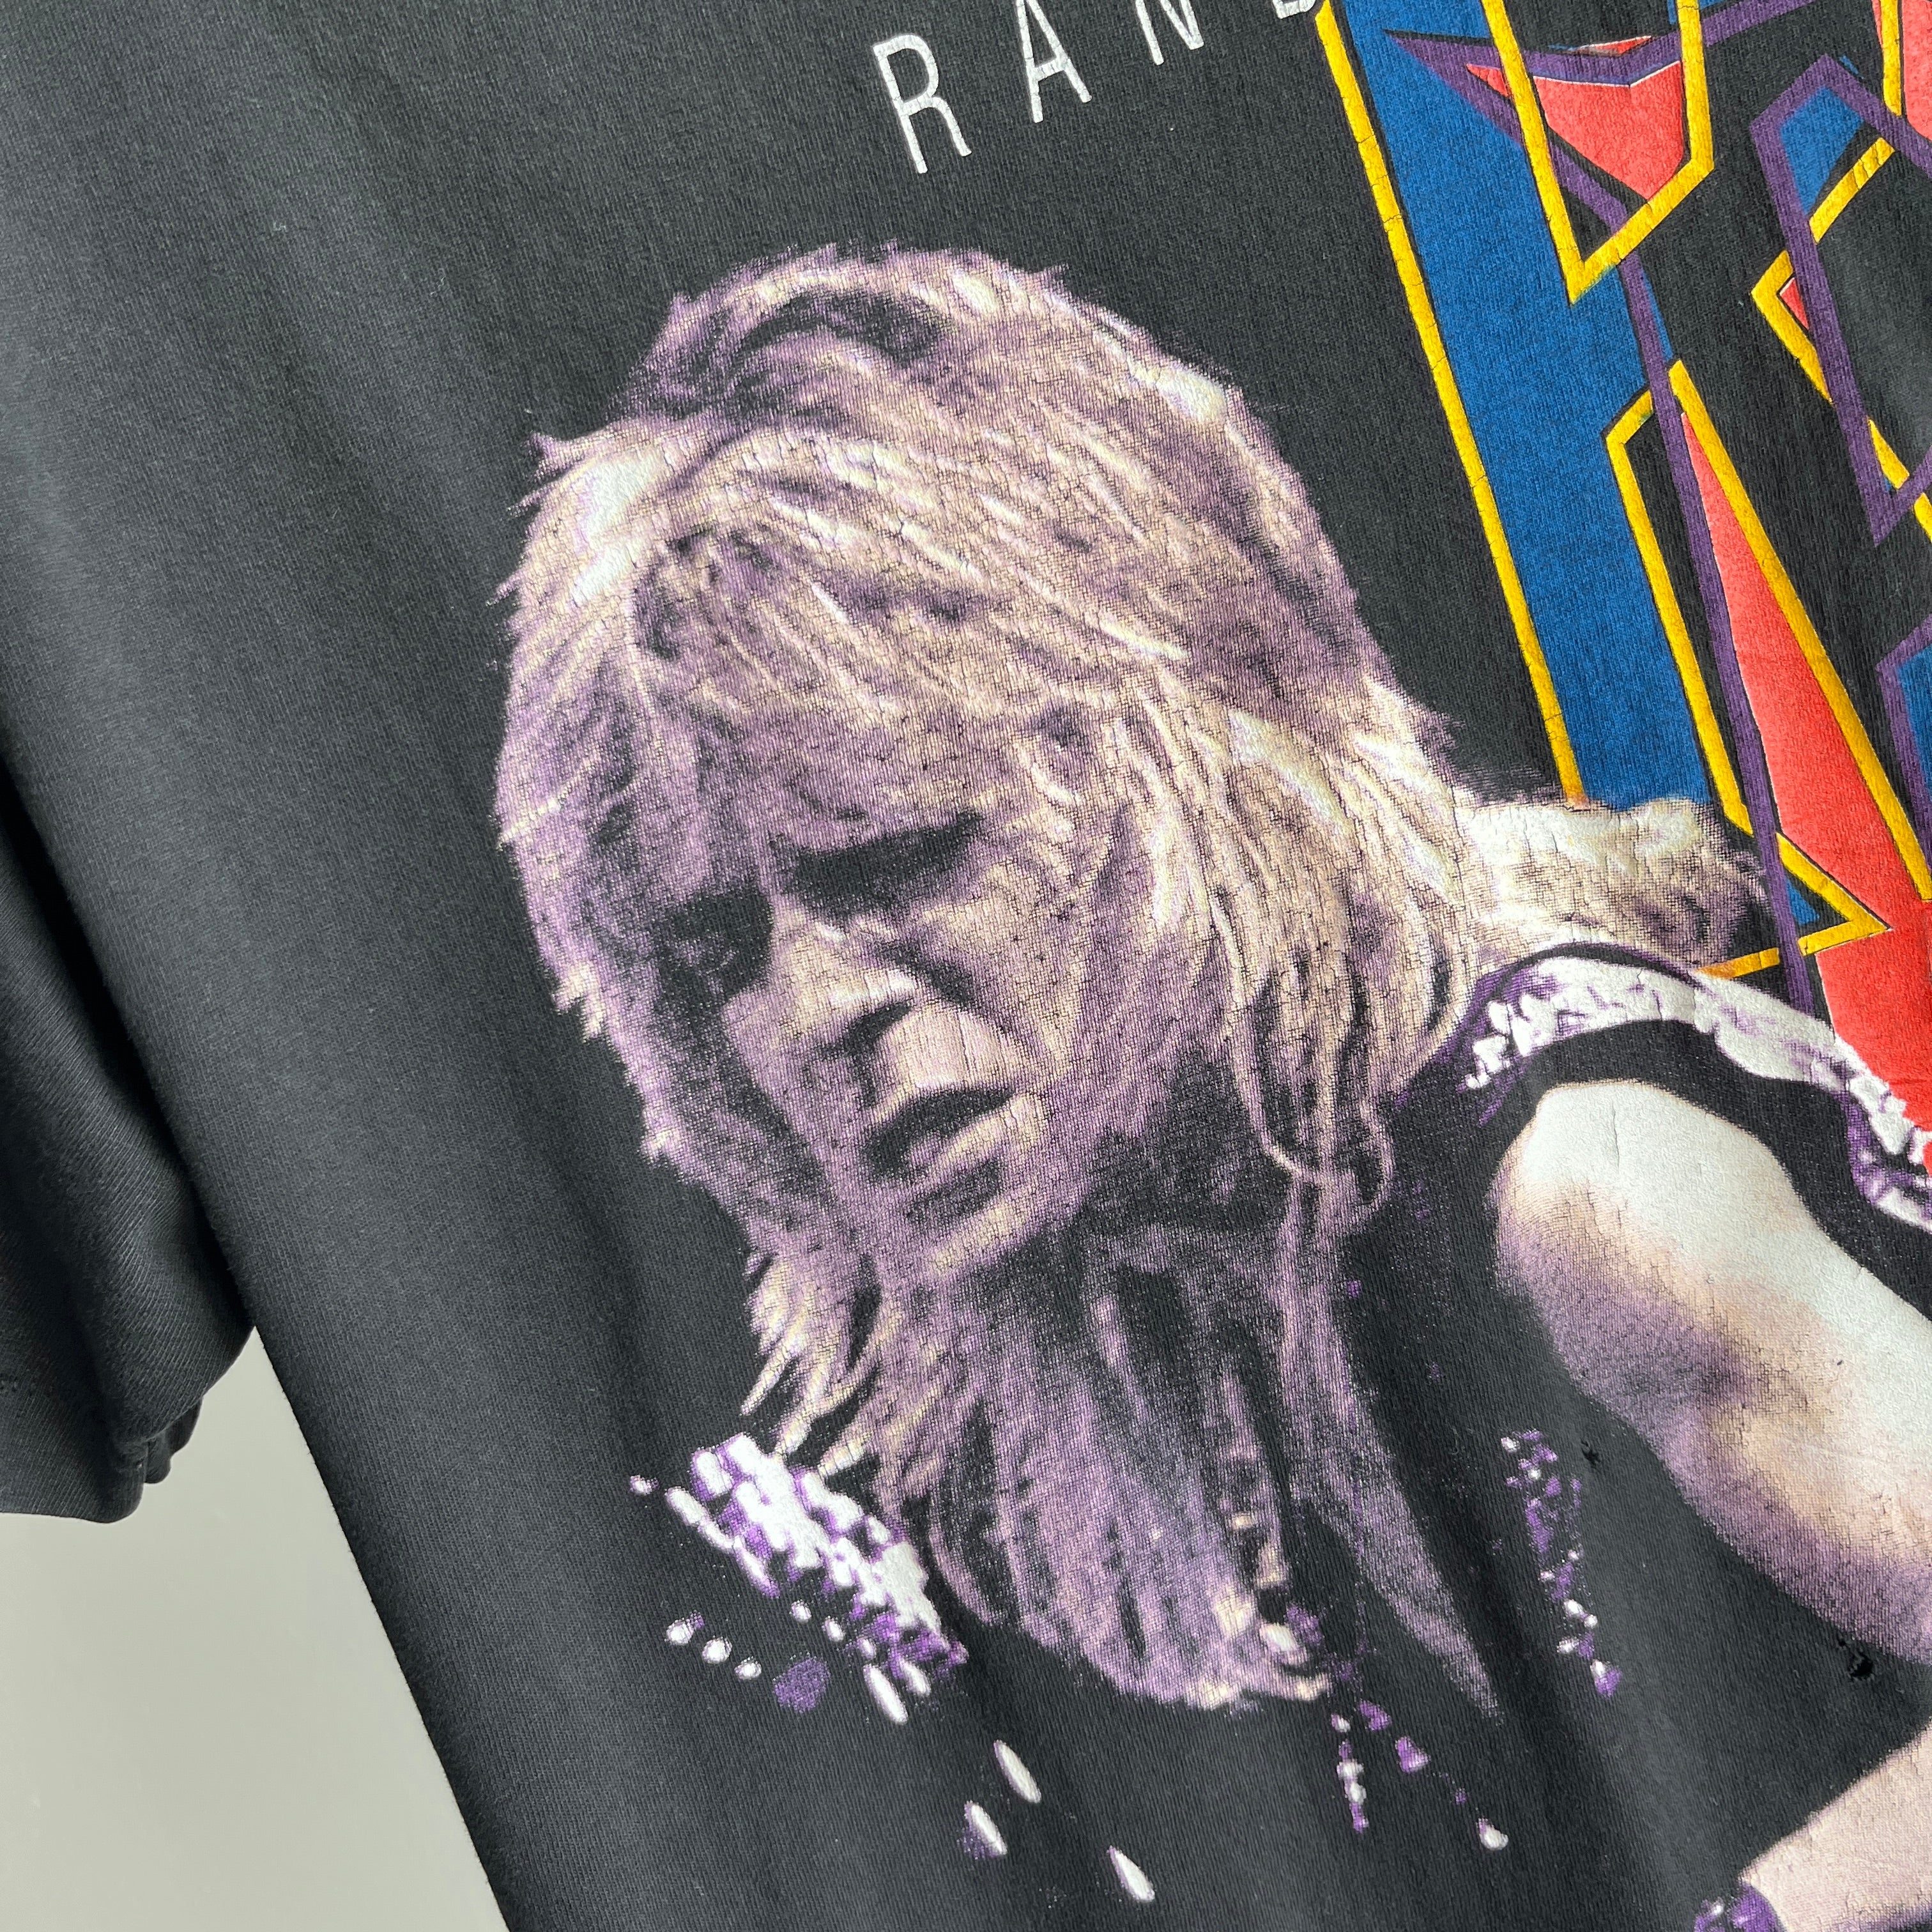 1991 Randy Rhoads T-Shirt